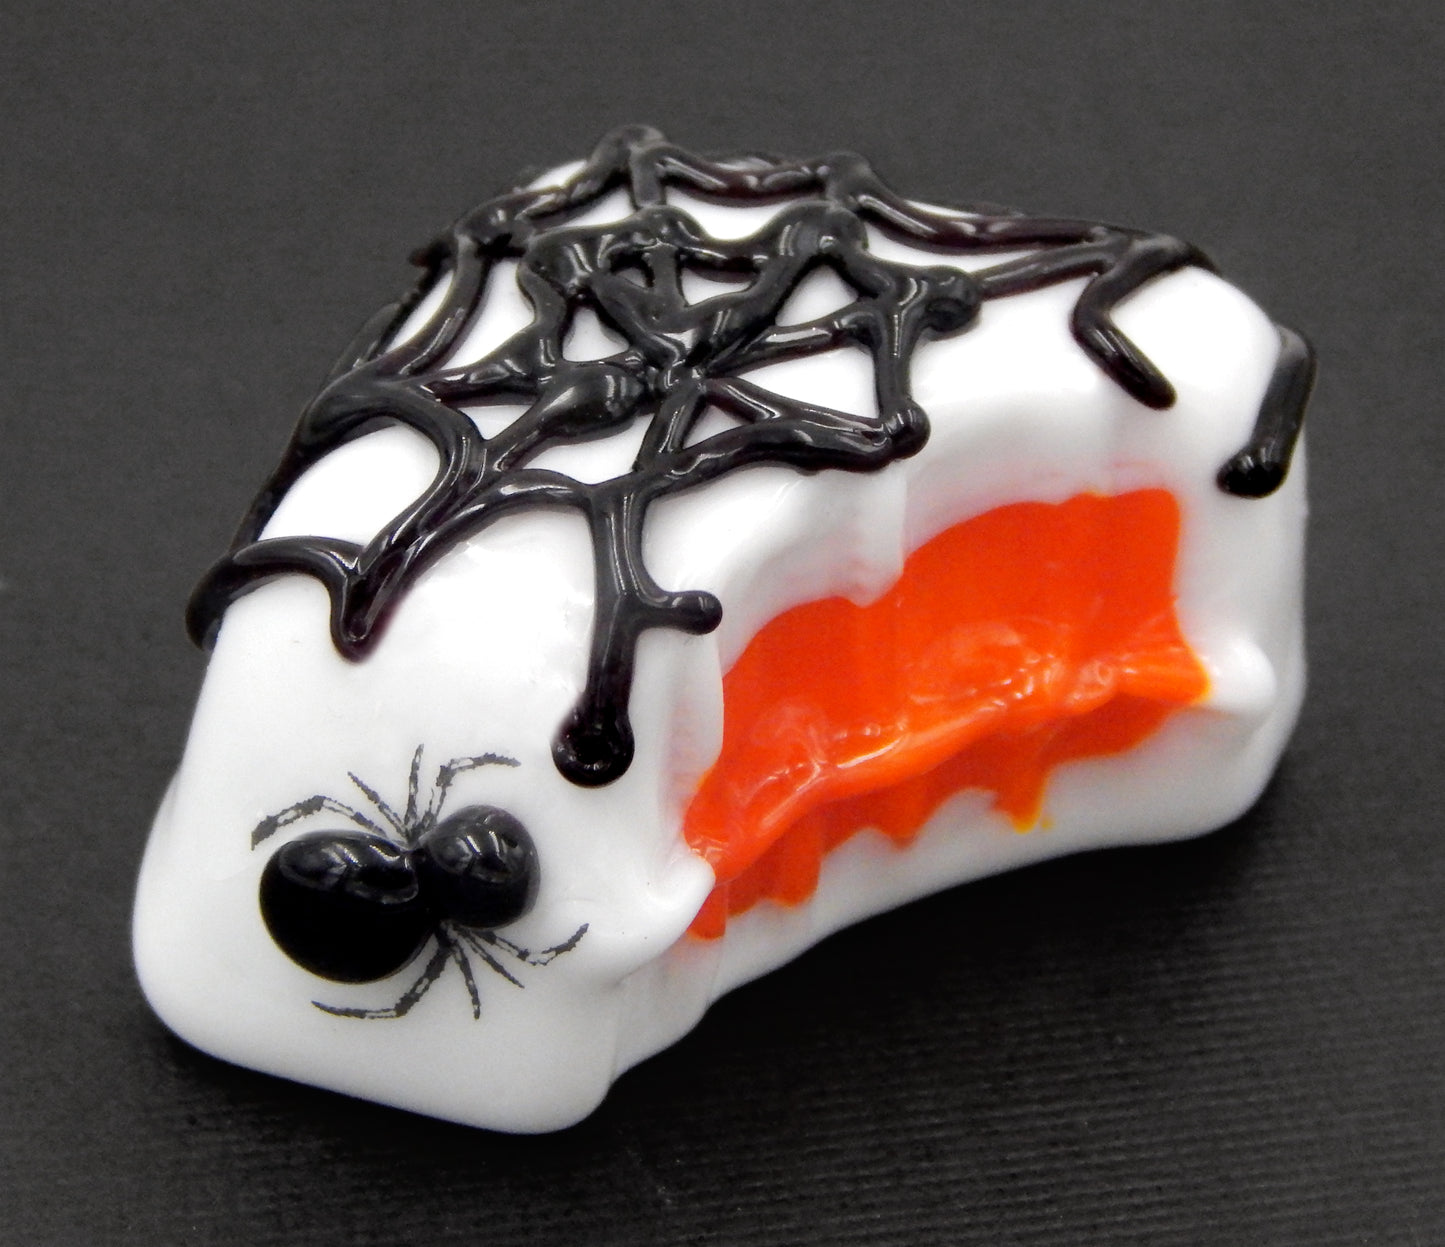 Glass Spider Bite with Orange Filling (B25-012WKO)